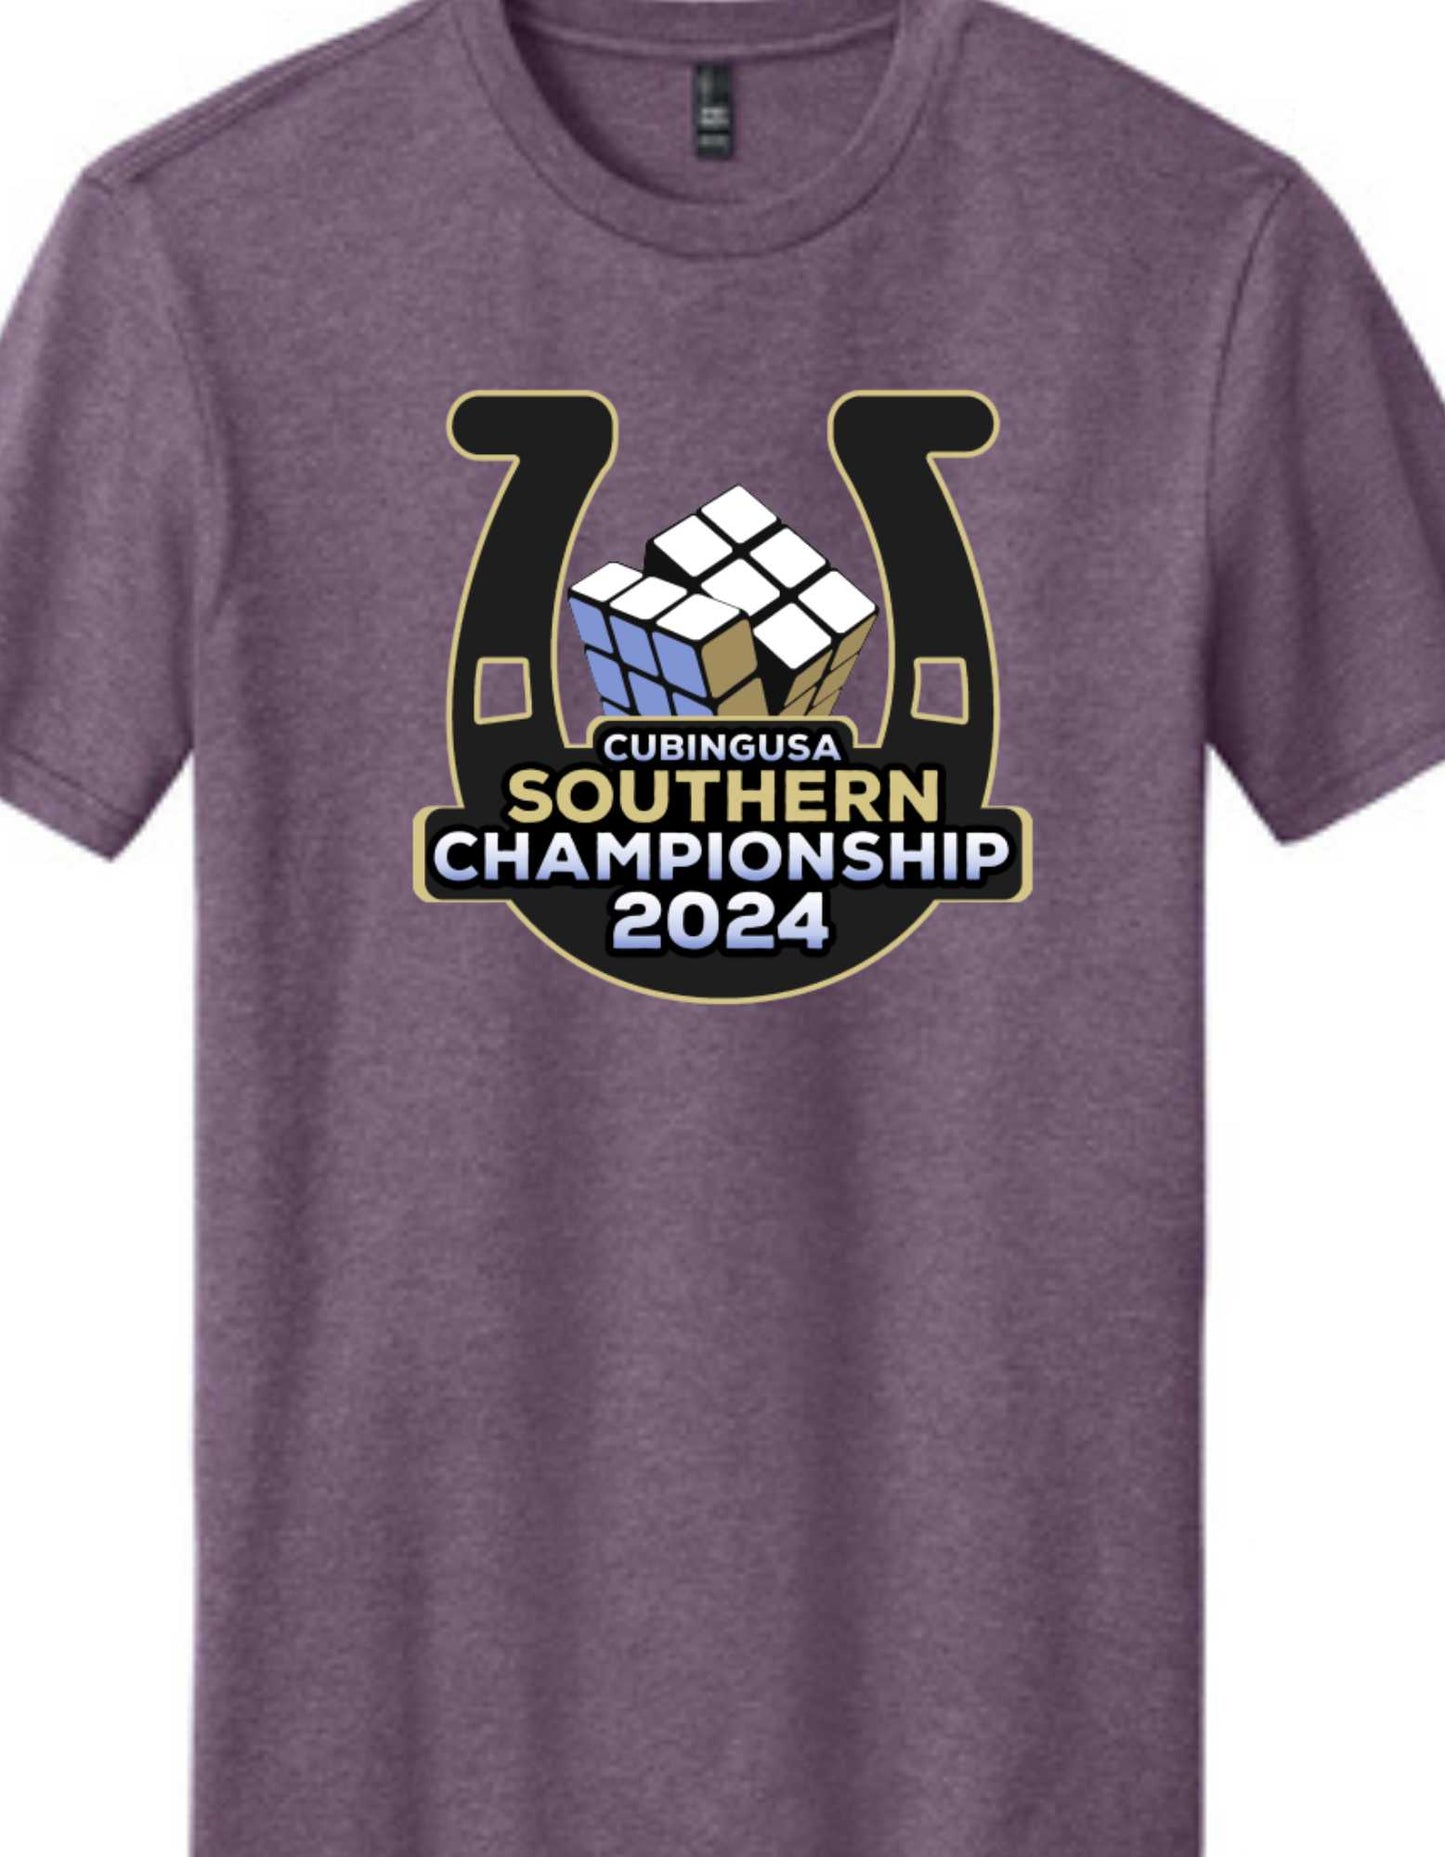 Southern Championship 2024